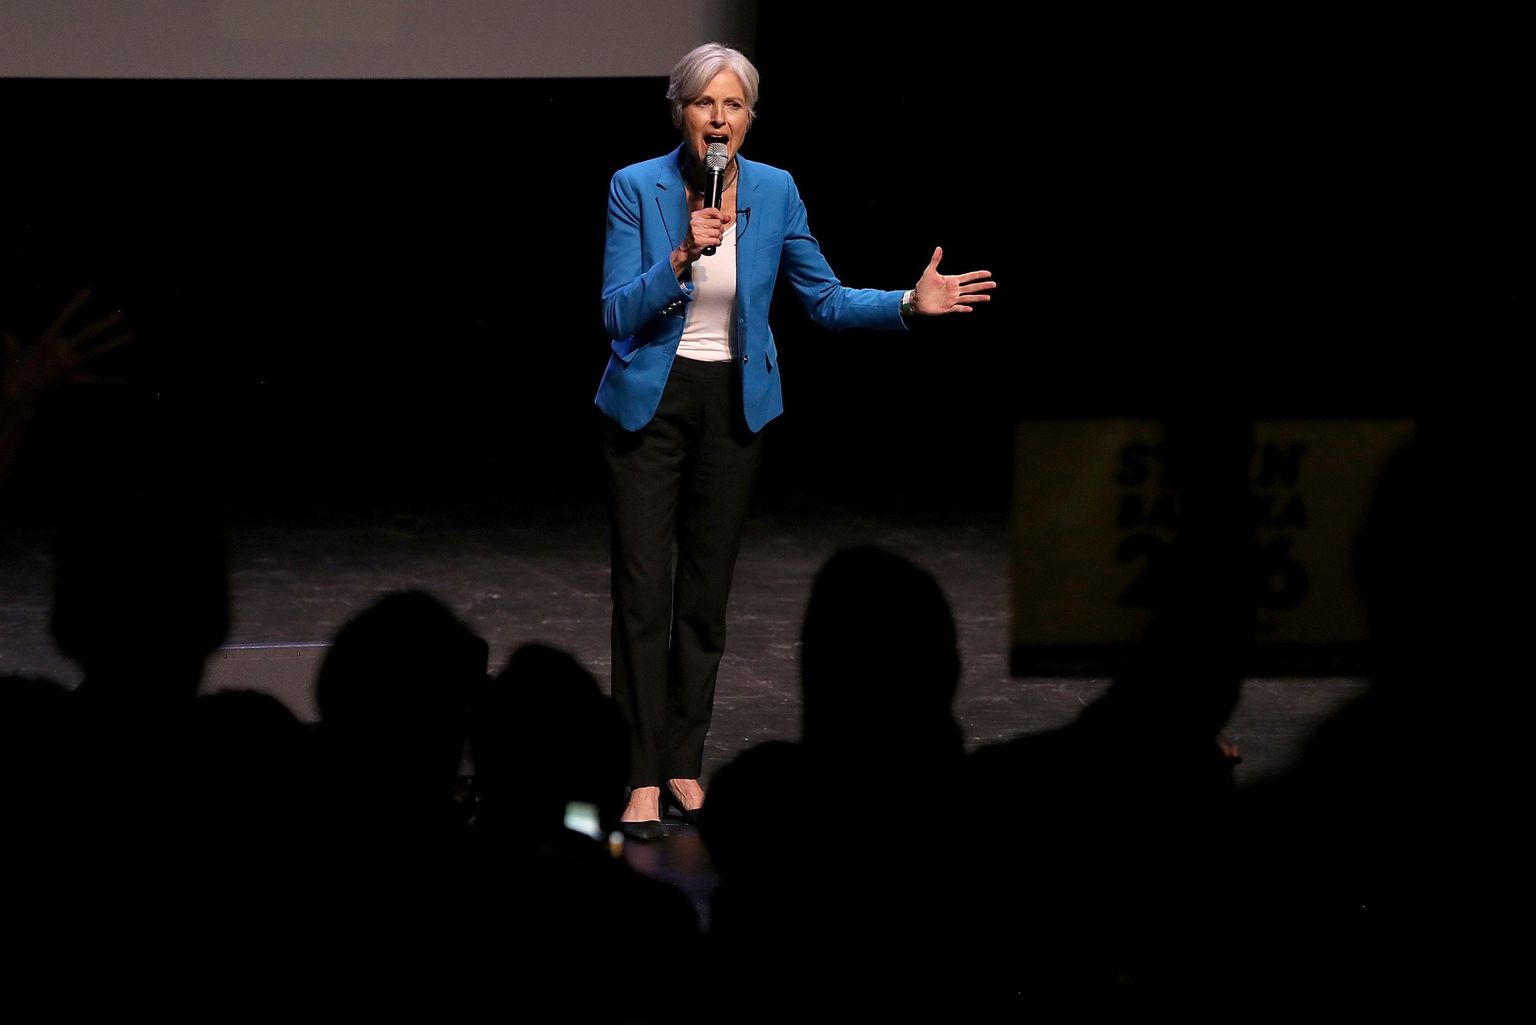 USA roheliste partei presidendikandidaat Jill Stein